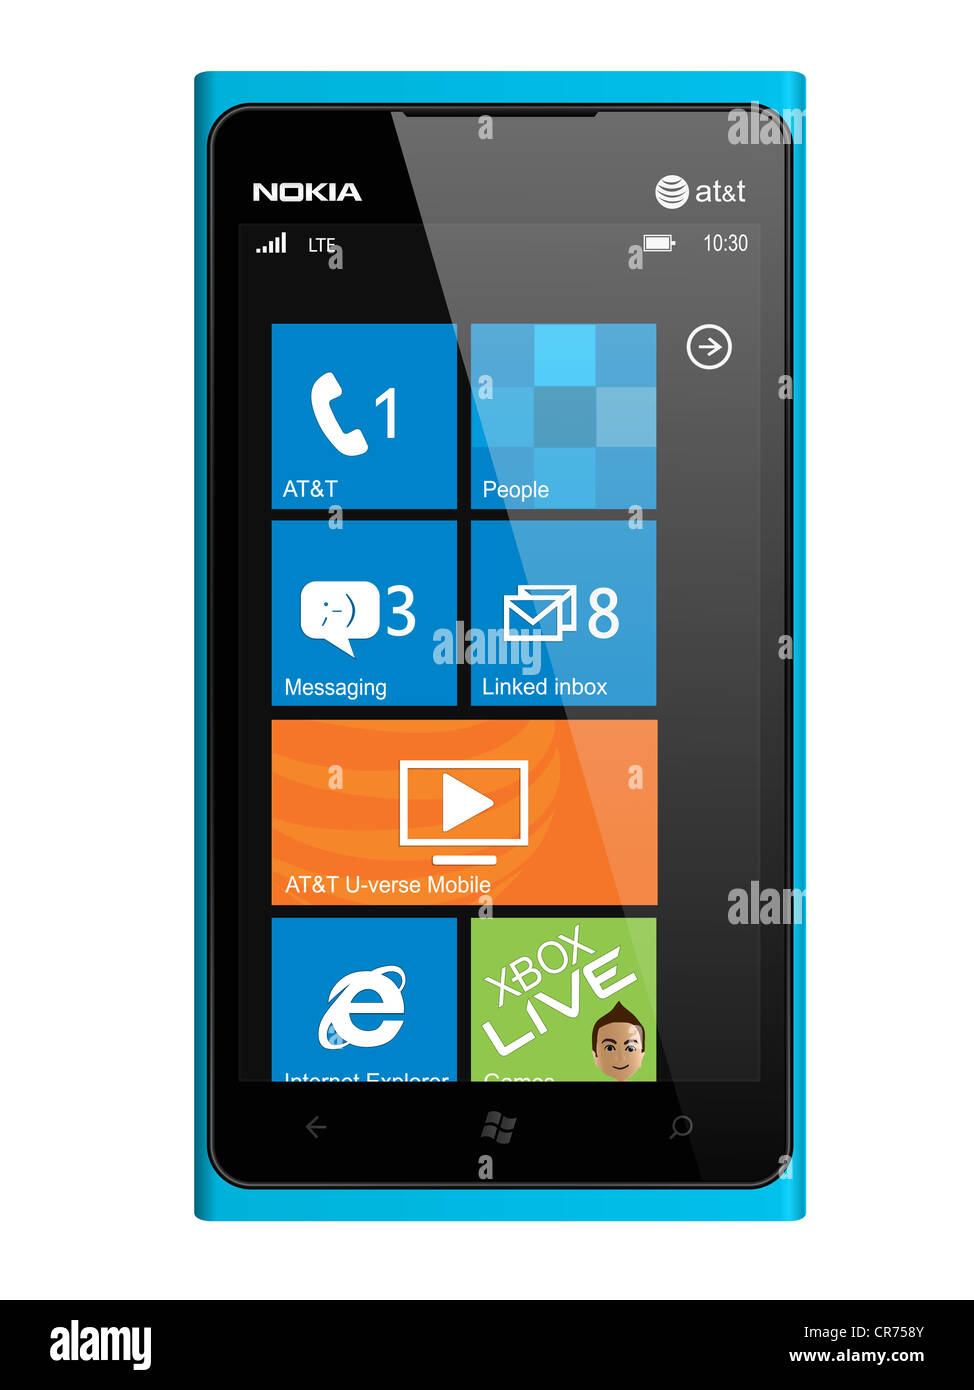 New Nokia smartphone design in blue. Featuring Windows Phone OS